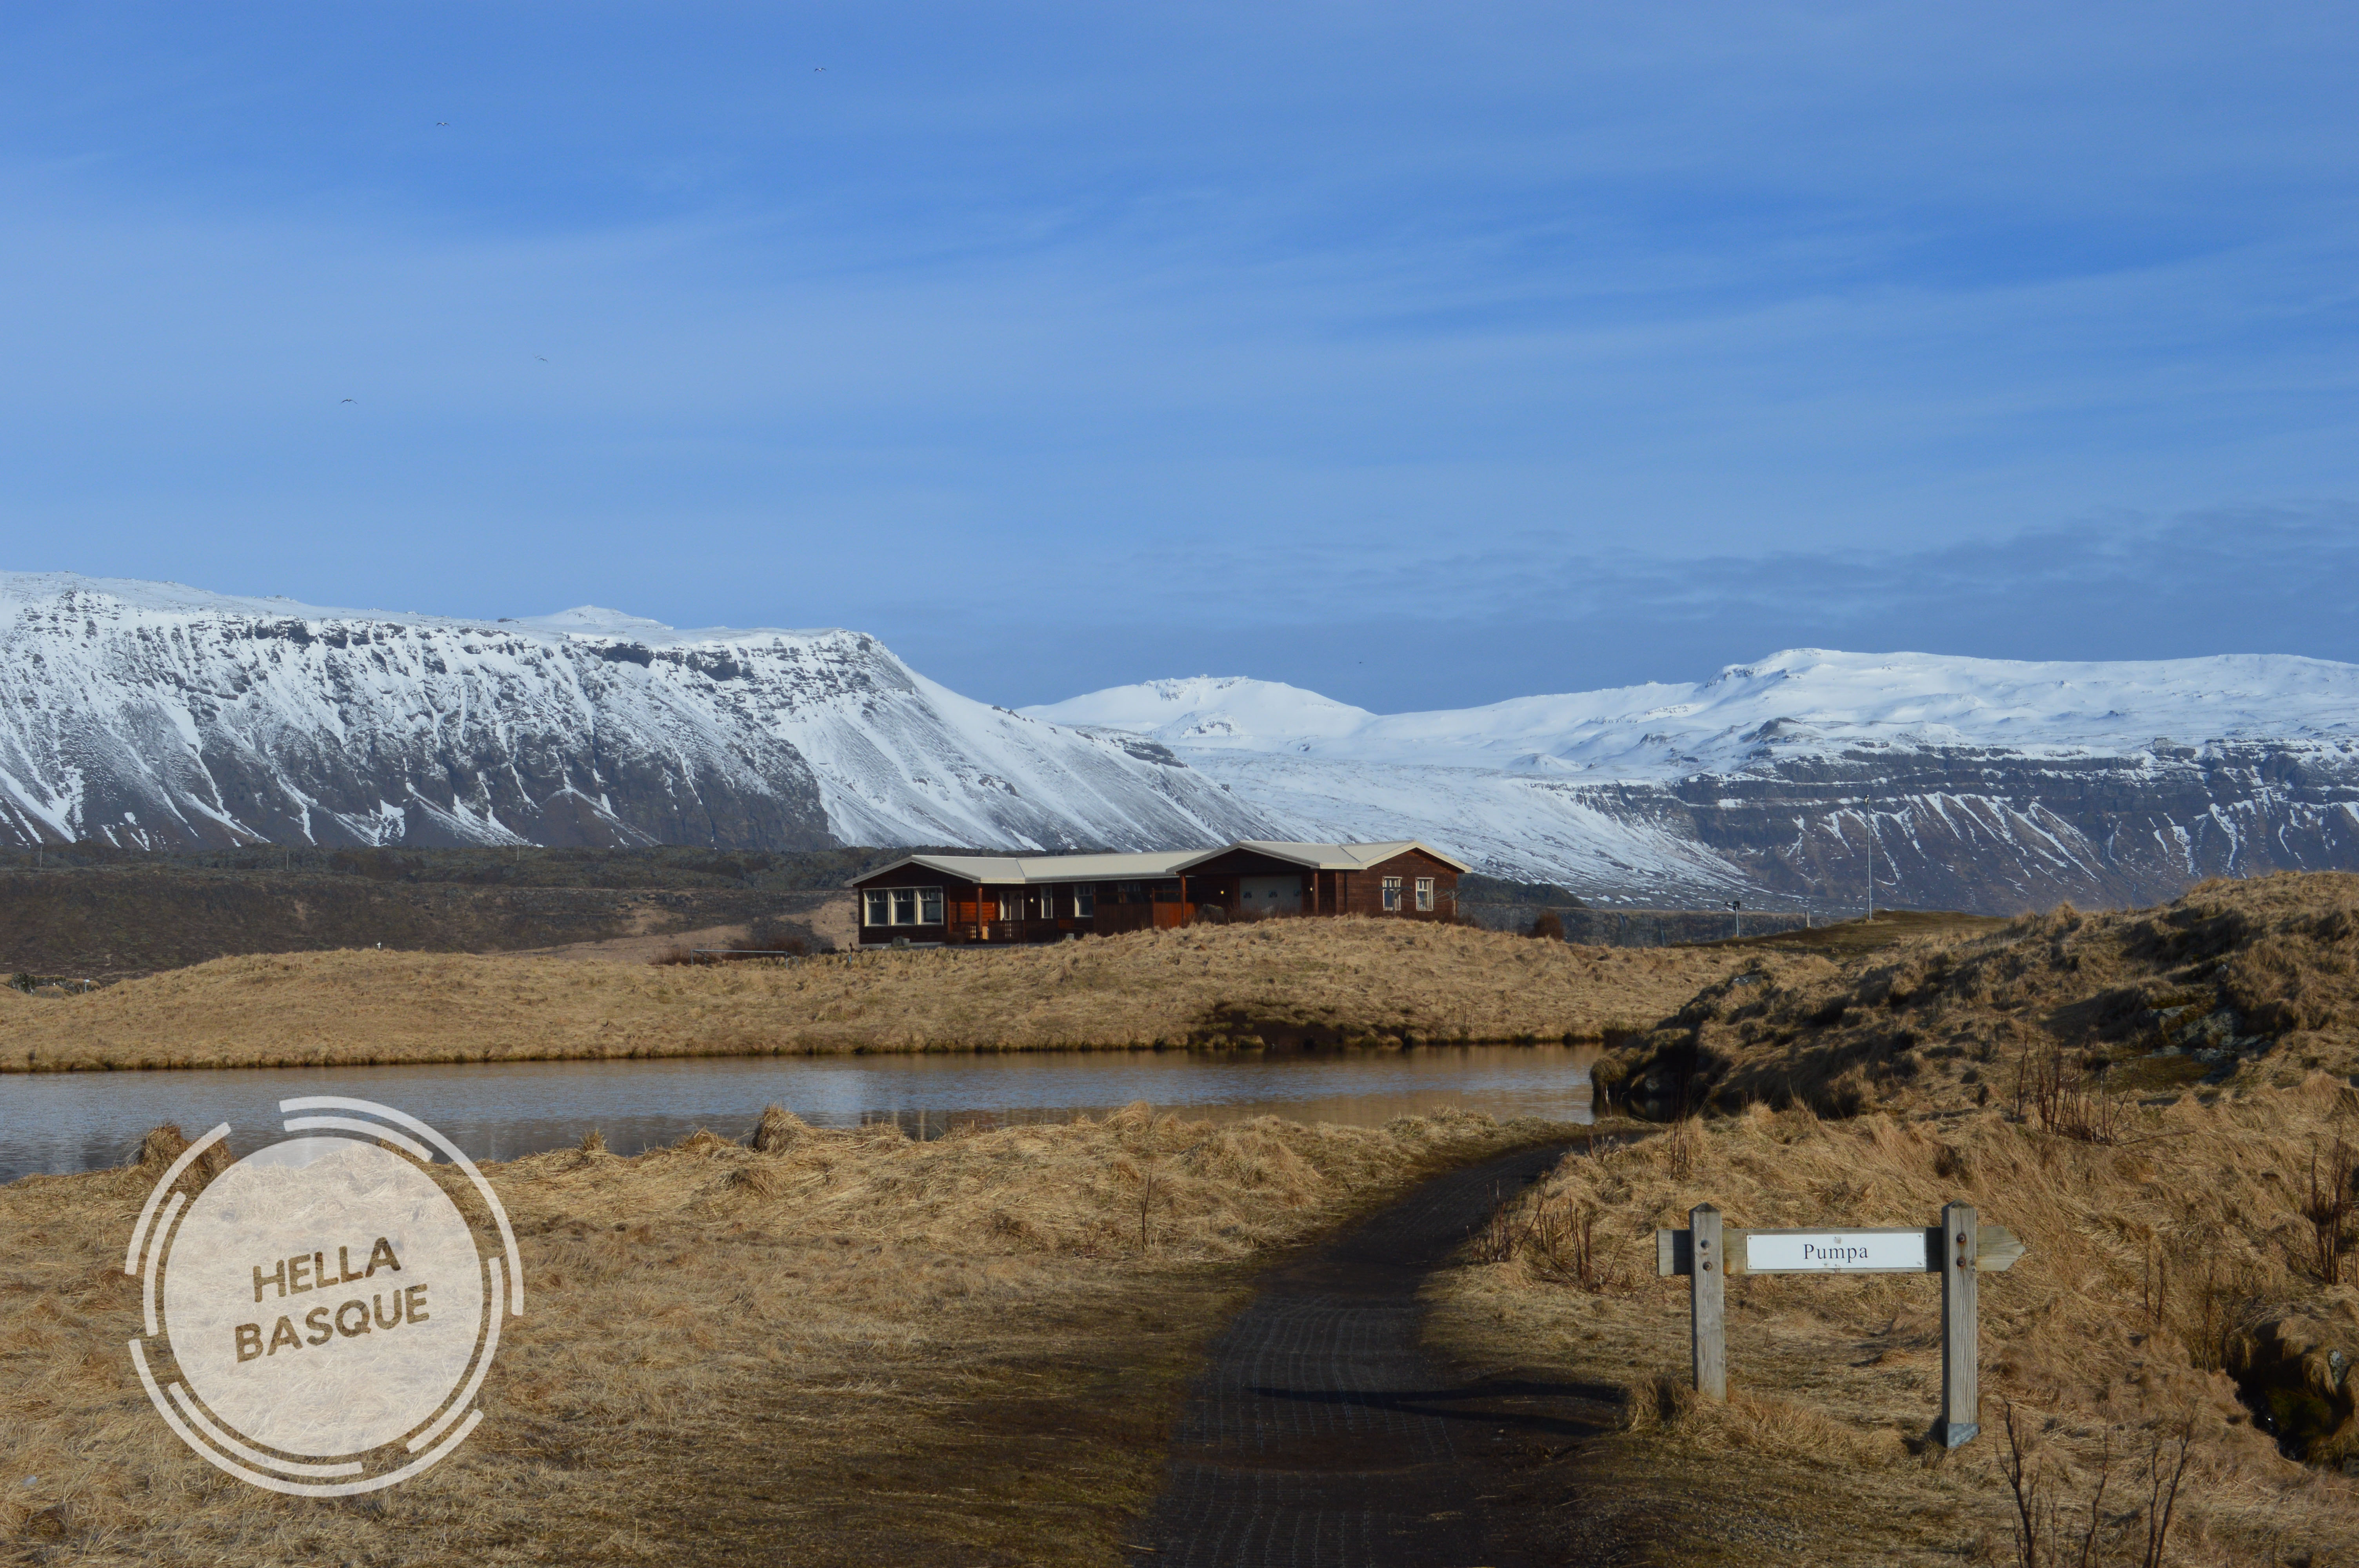 Iceland Mountains